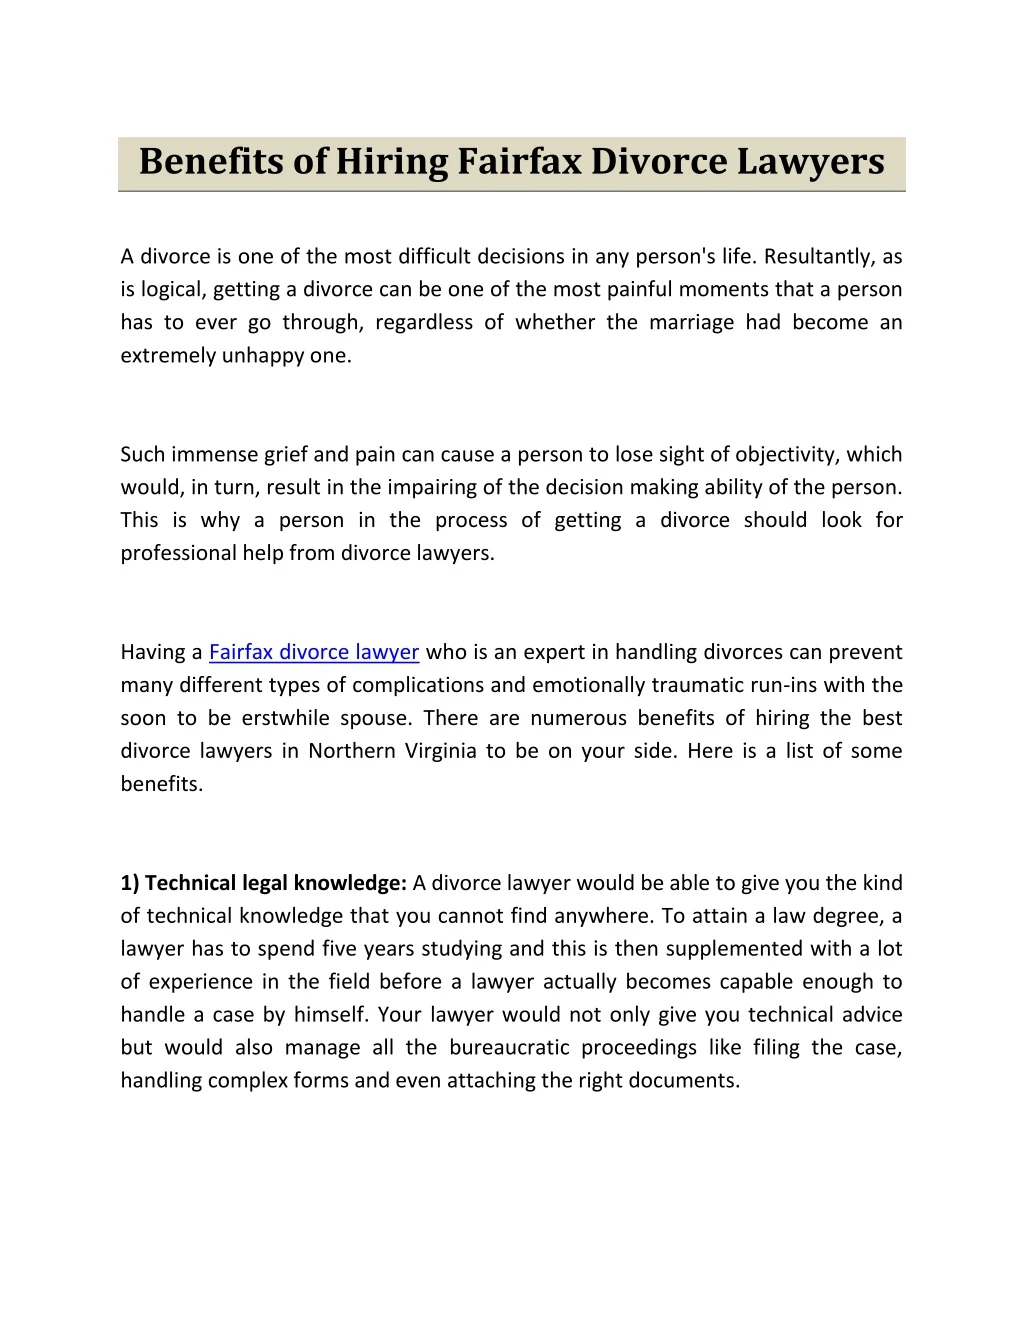 benefits of hiring fairfax divorce lawyers